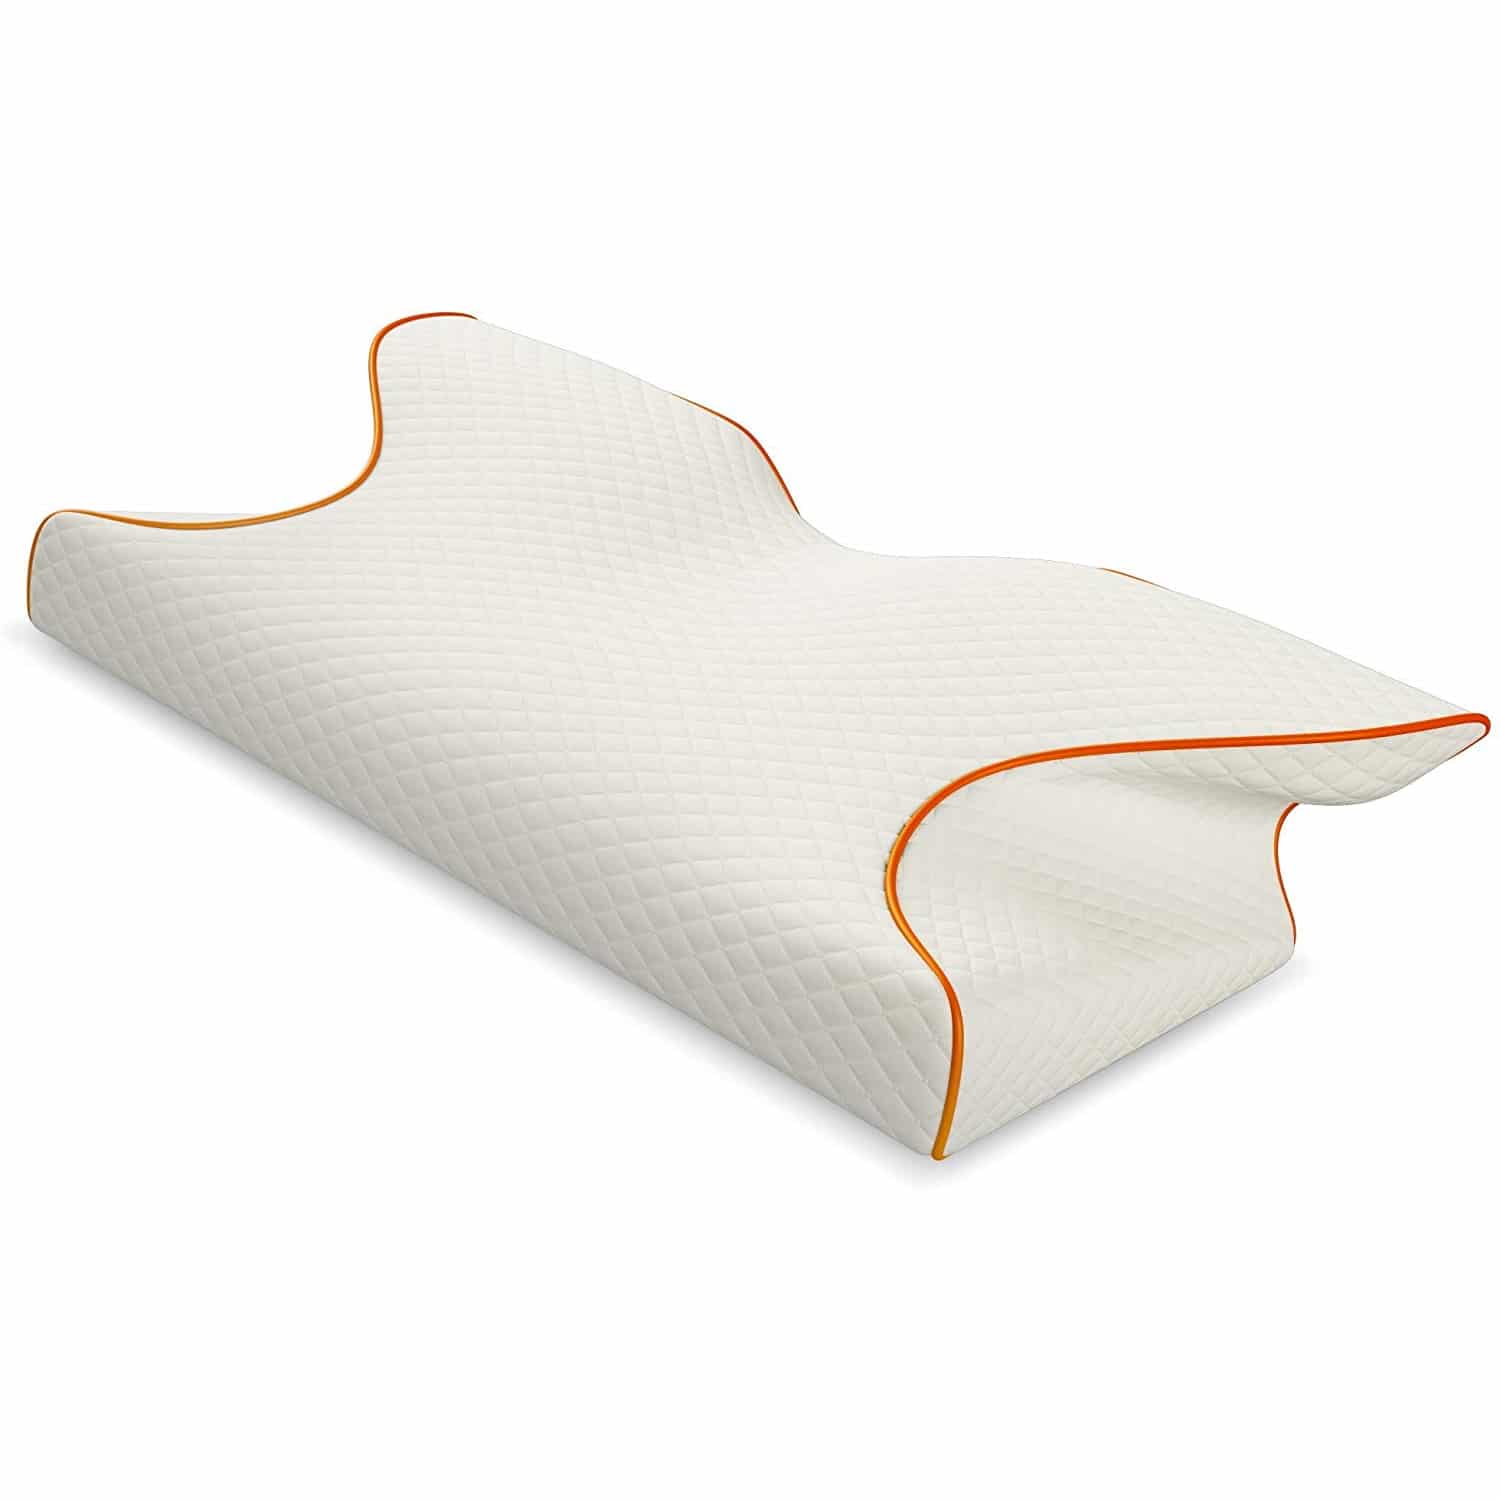 SmartDelux Orthopedic Memory Foam Pillow